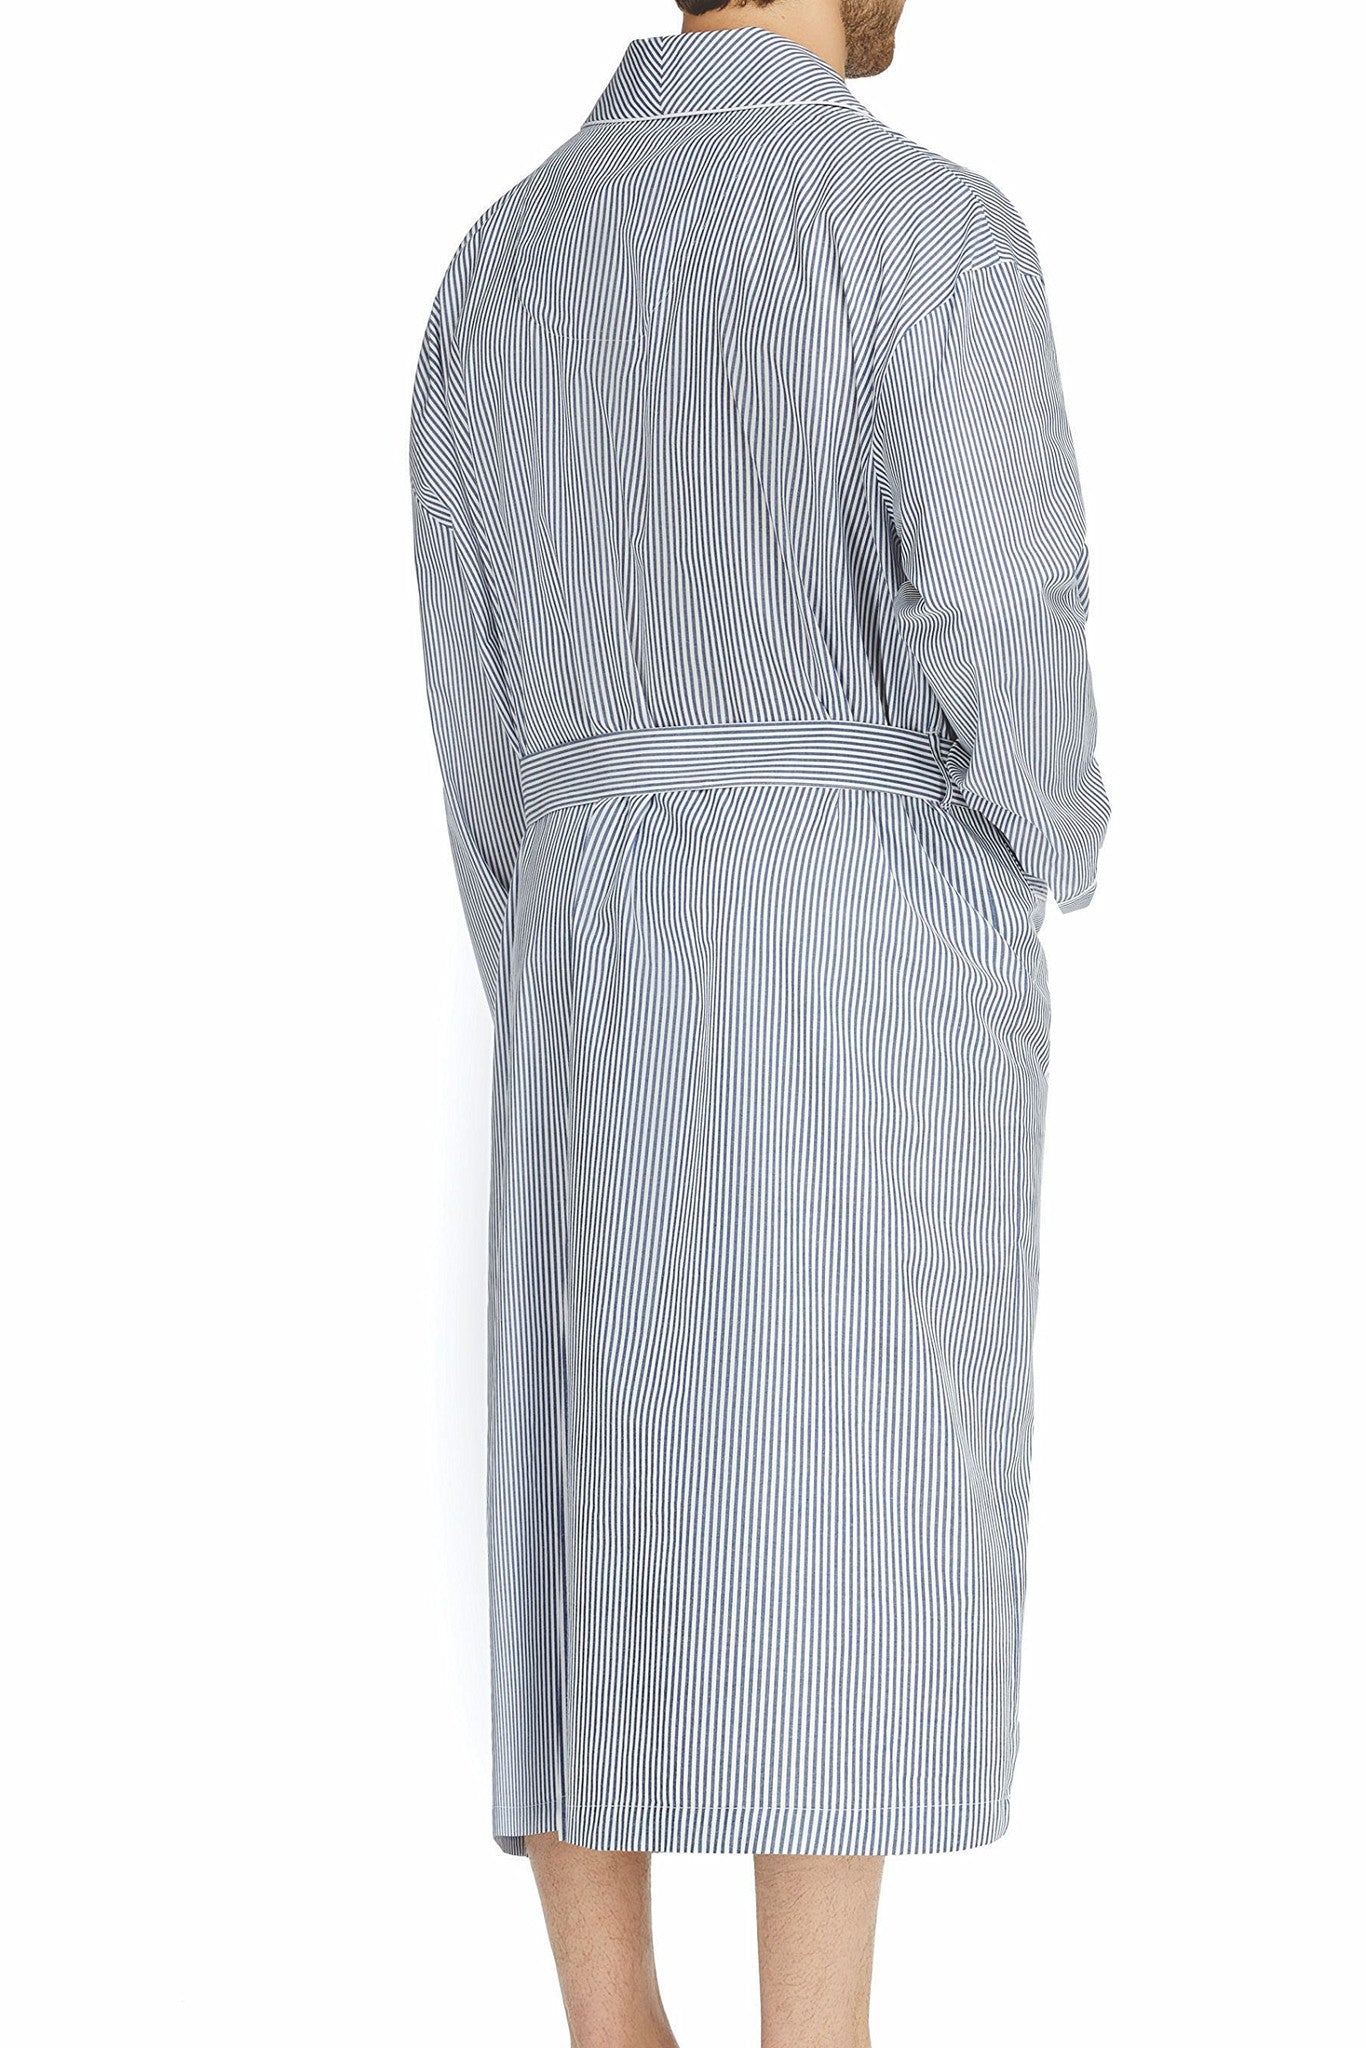 Big and Tall Cobalt Woven Shawl Robe